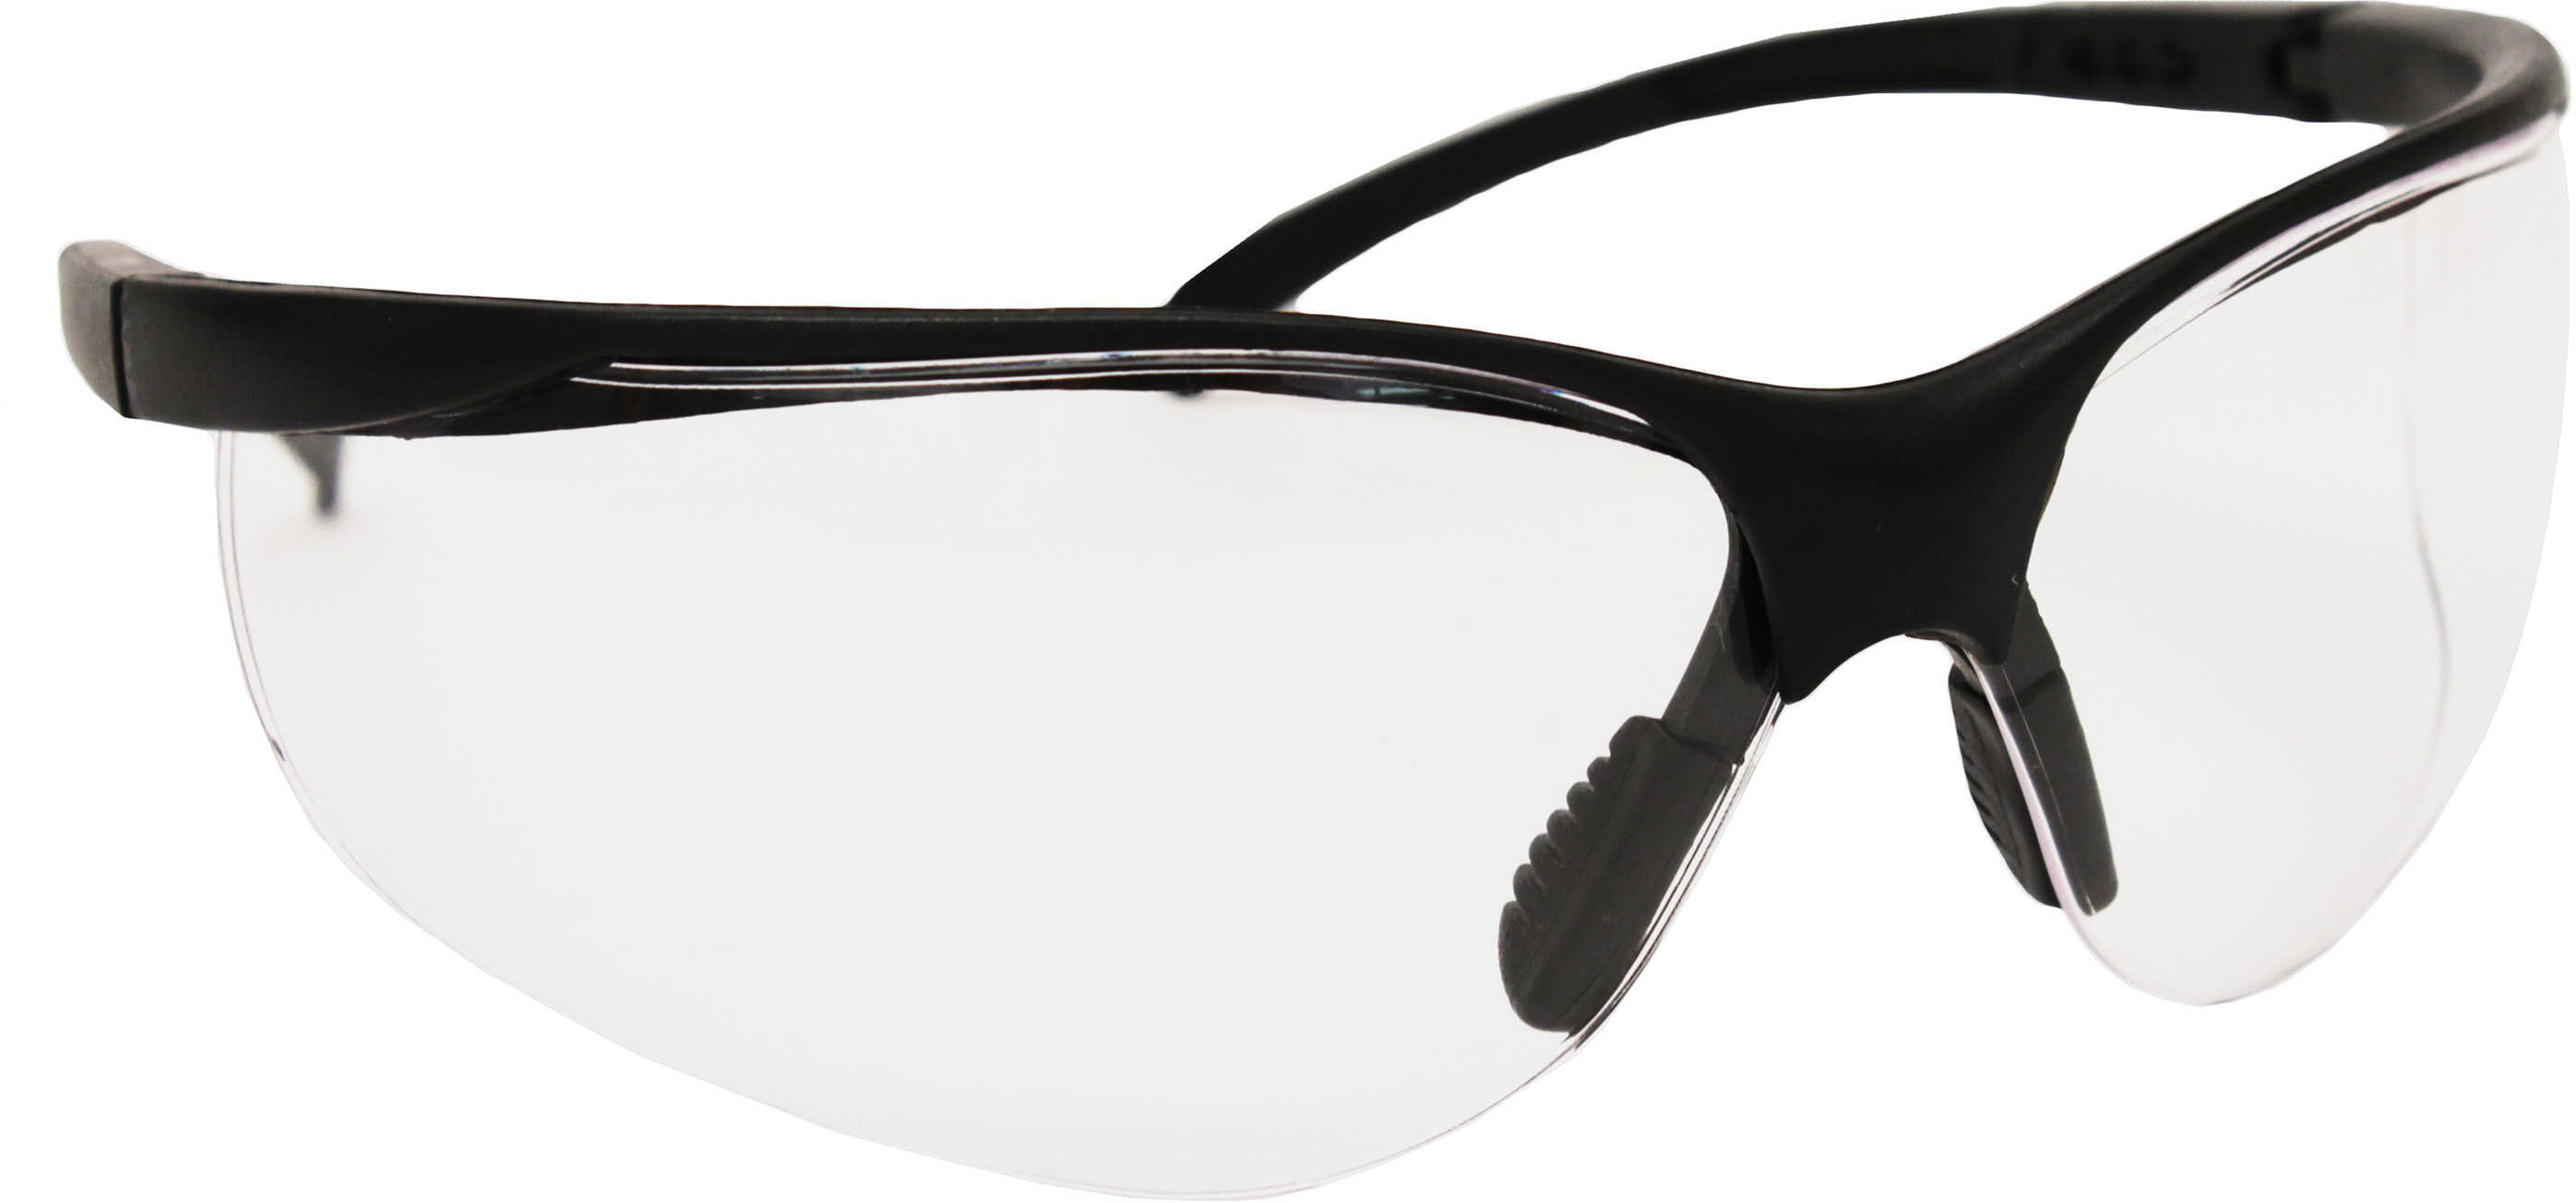 Caldwell Pro Range Glasses Clear Model: 320040